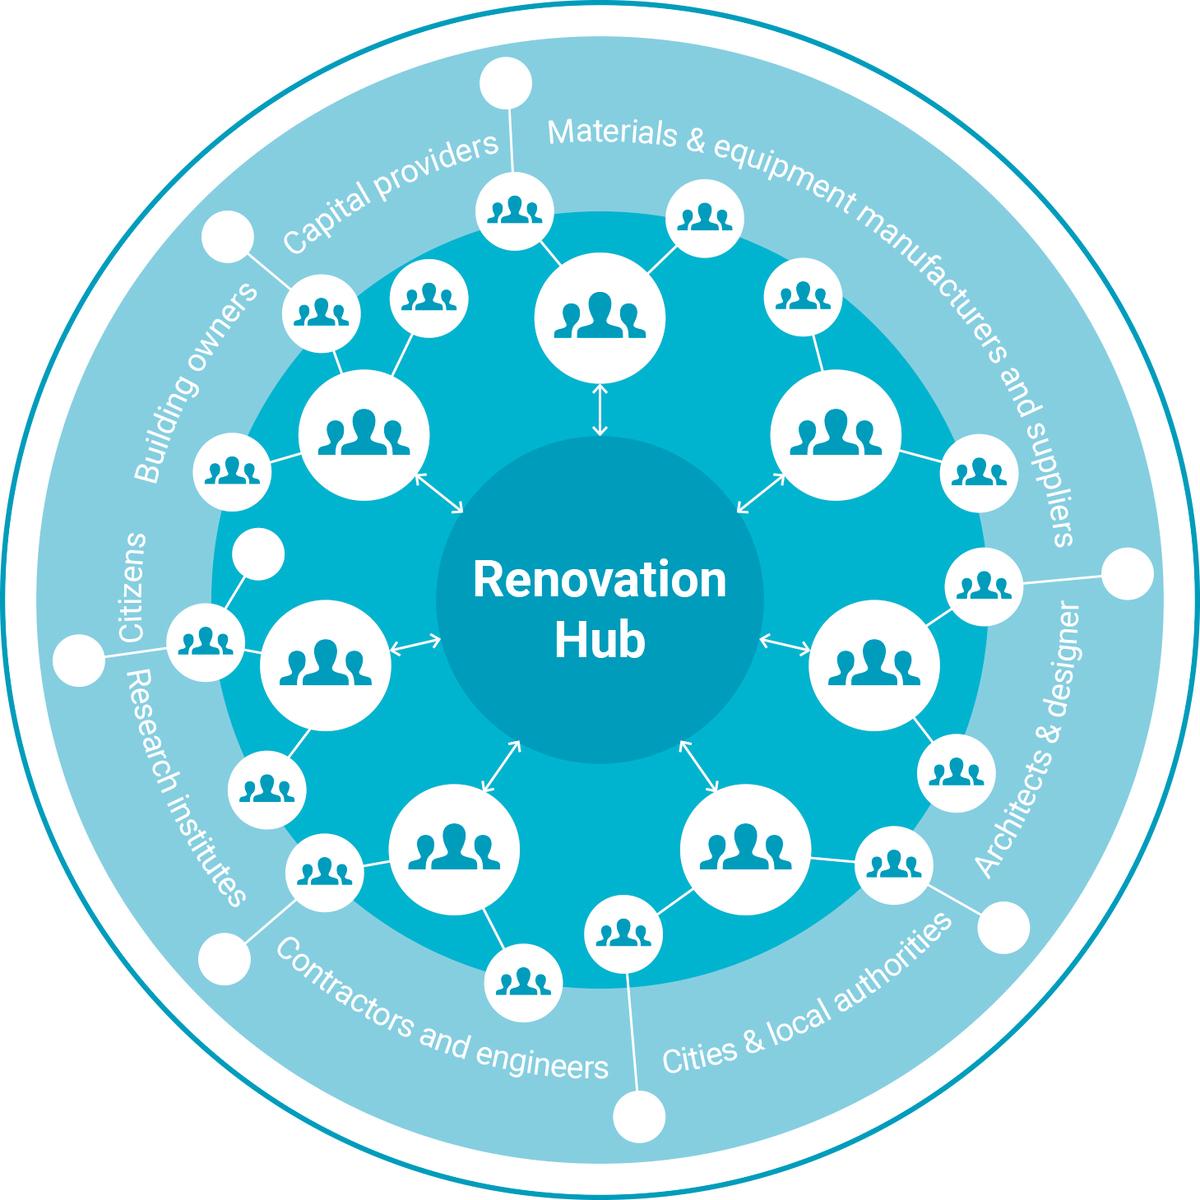 Launch of the Renovation Hub: EU platform for energy-efficient refurbishment technologies and business models